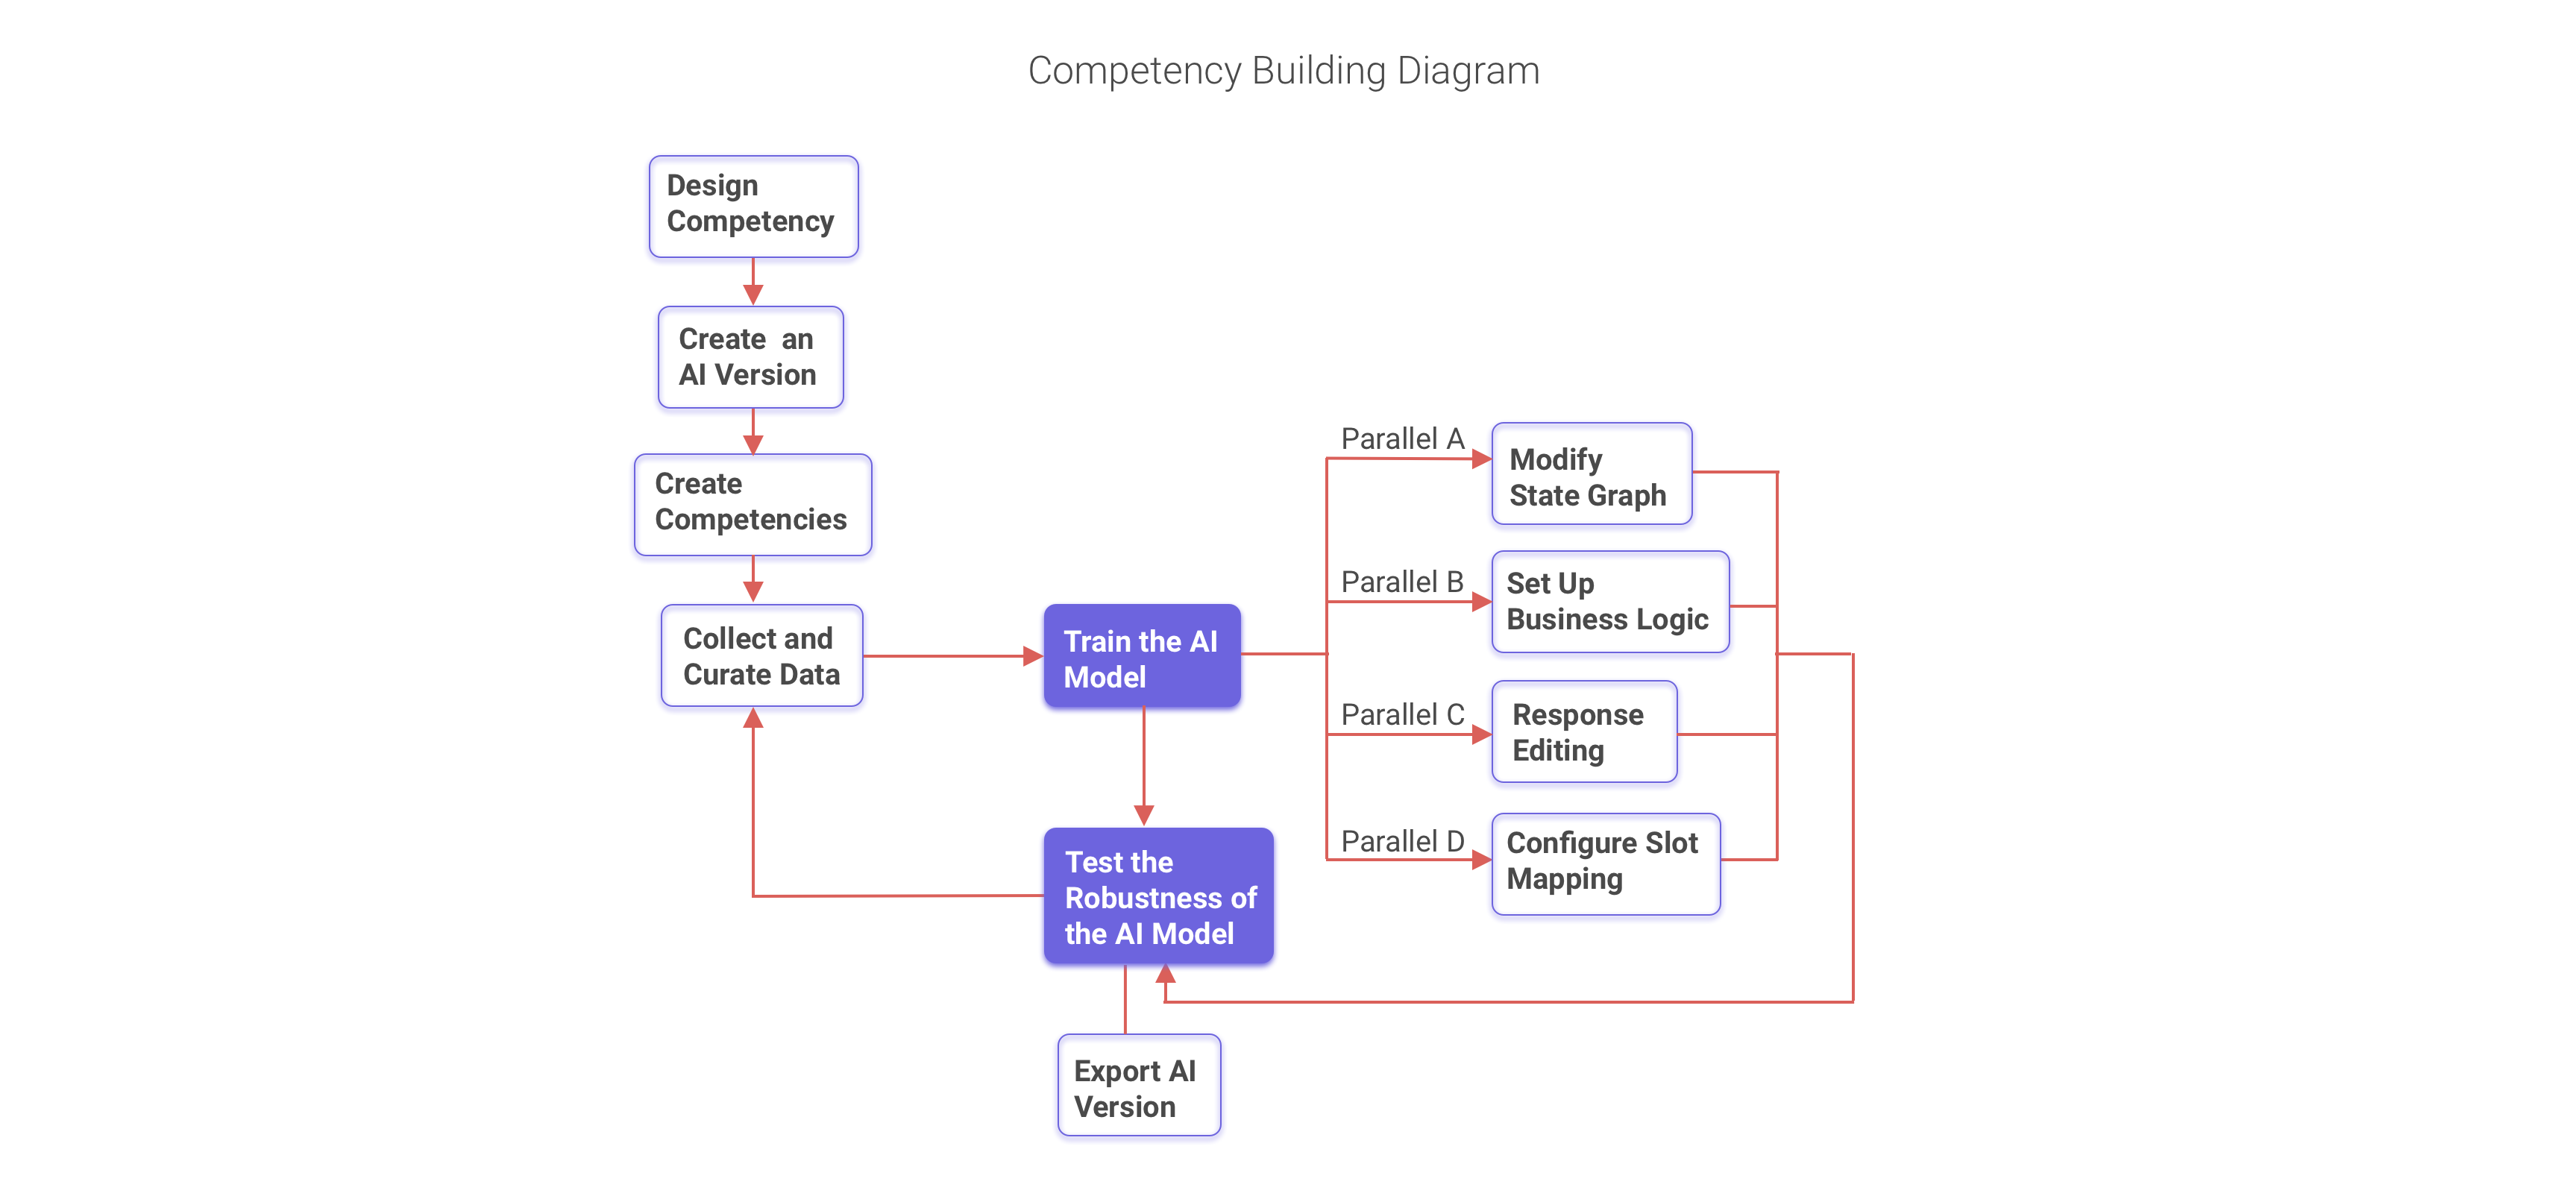 Full Competency Building Diagram